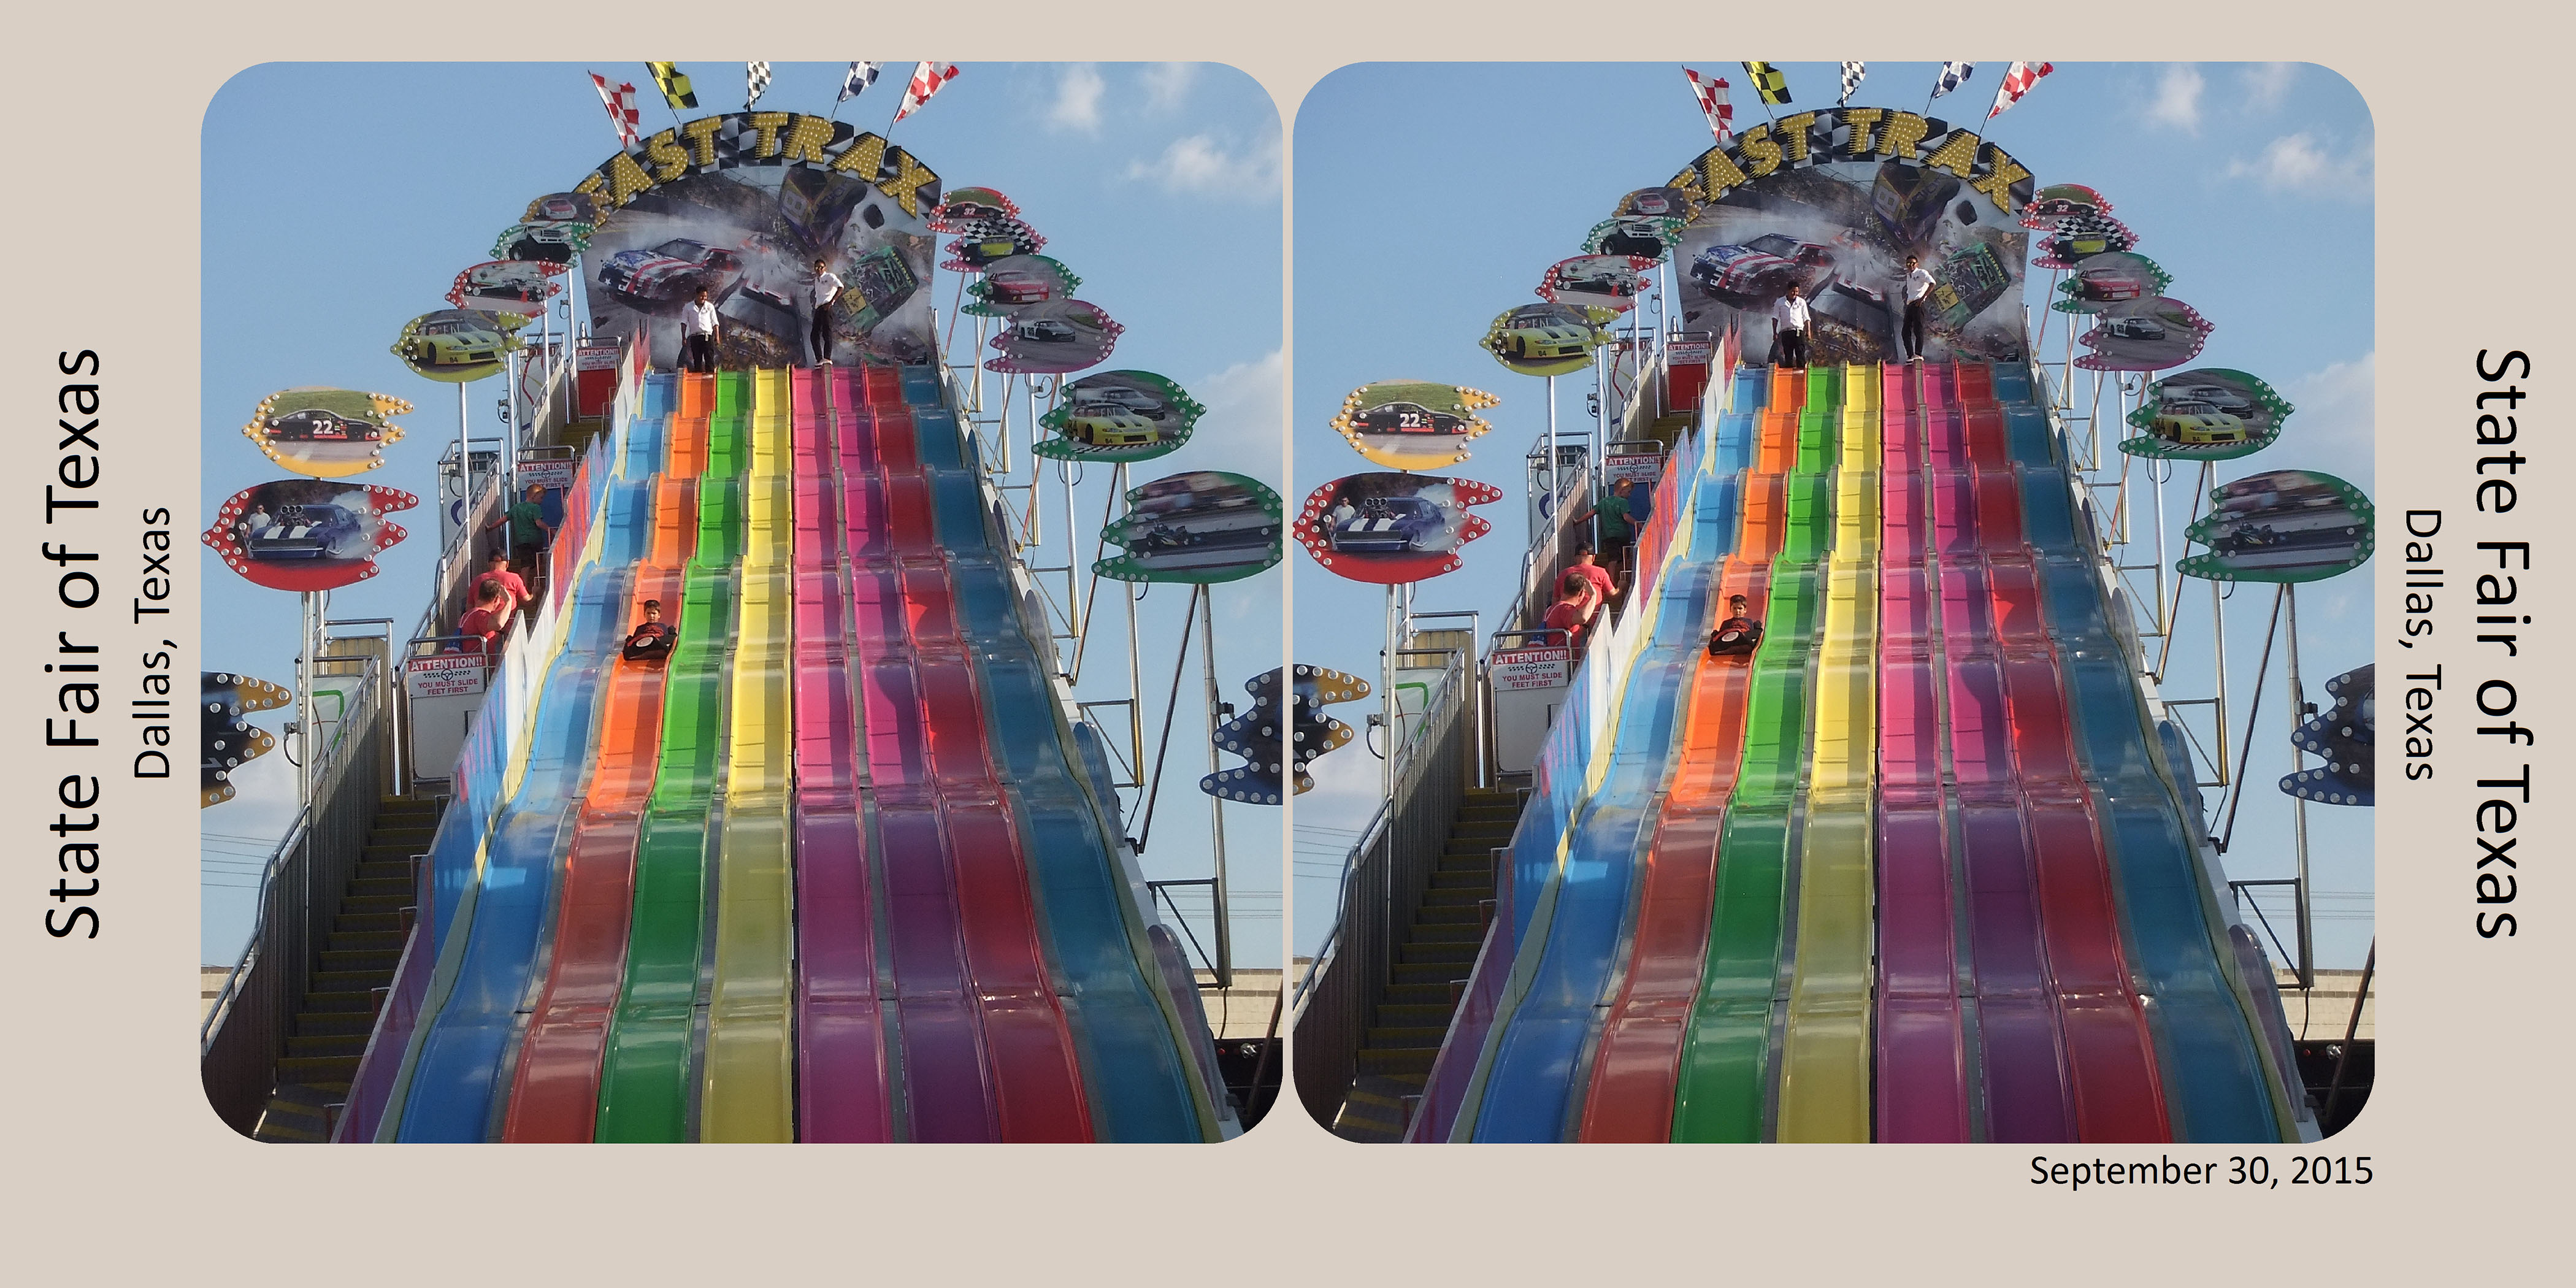 Super Slide at the Texas State Fair